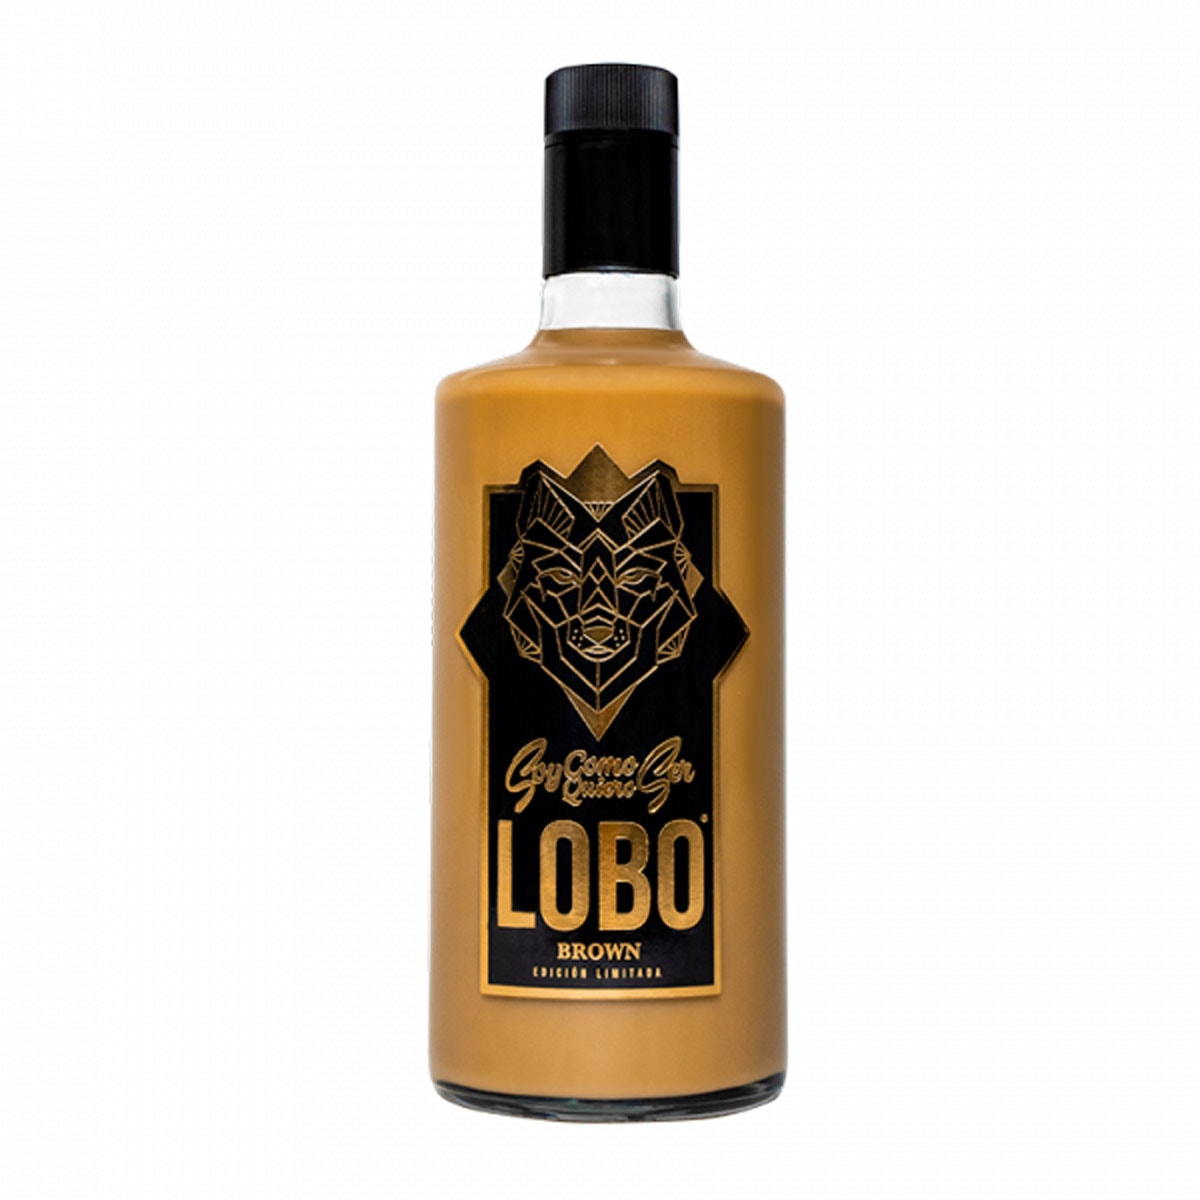 Lobo crema tequila turrón brown (ágave) 70 cl